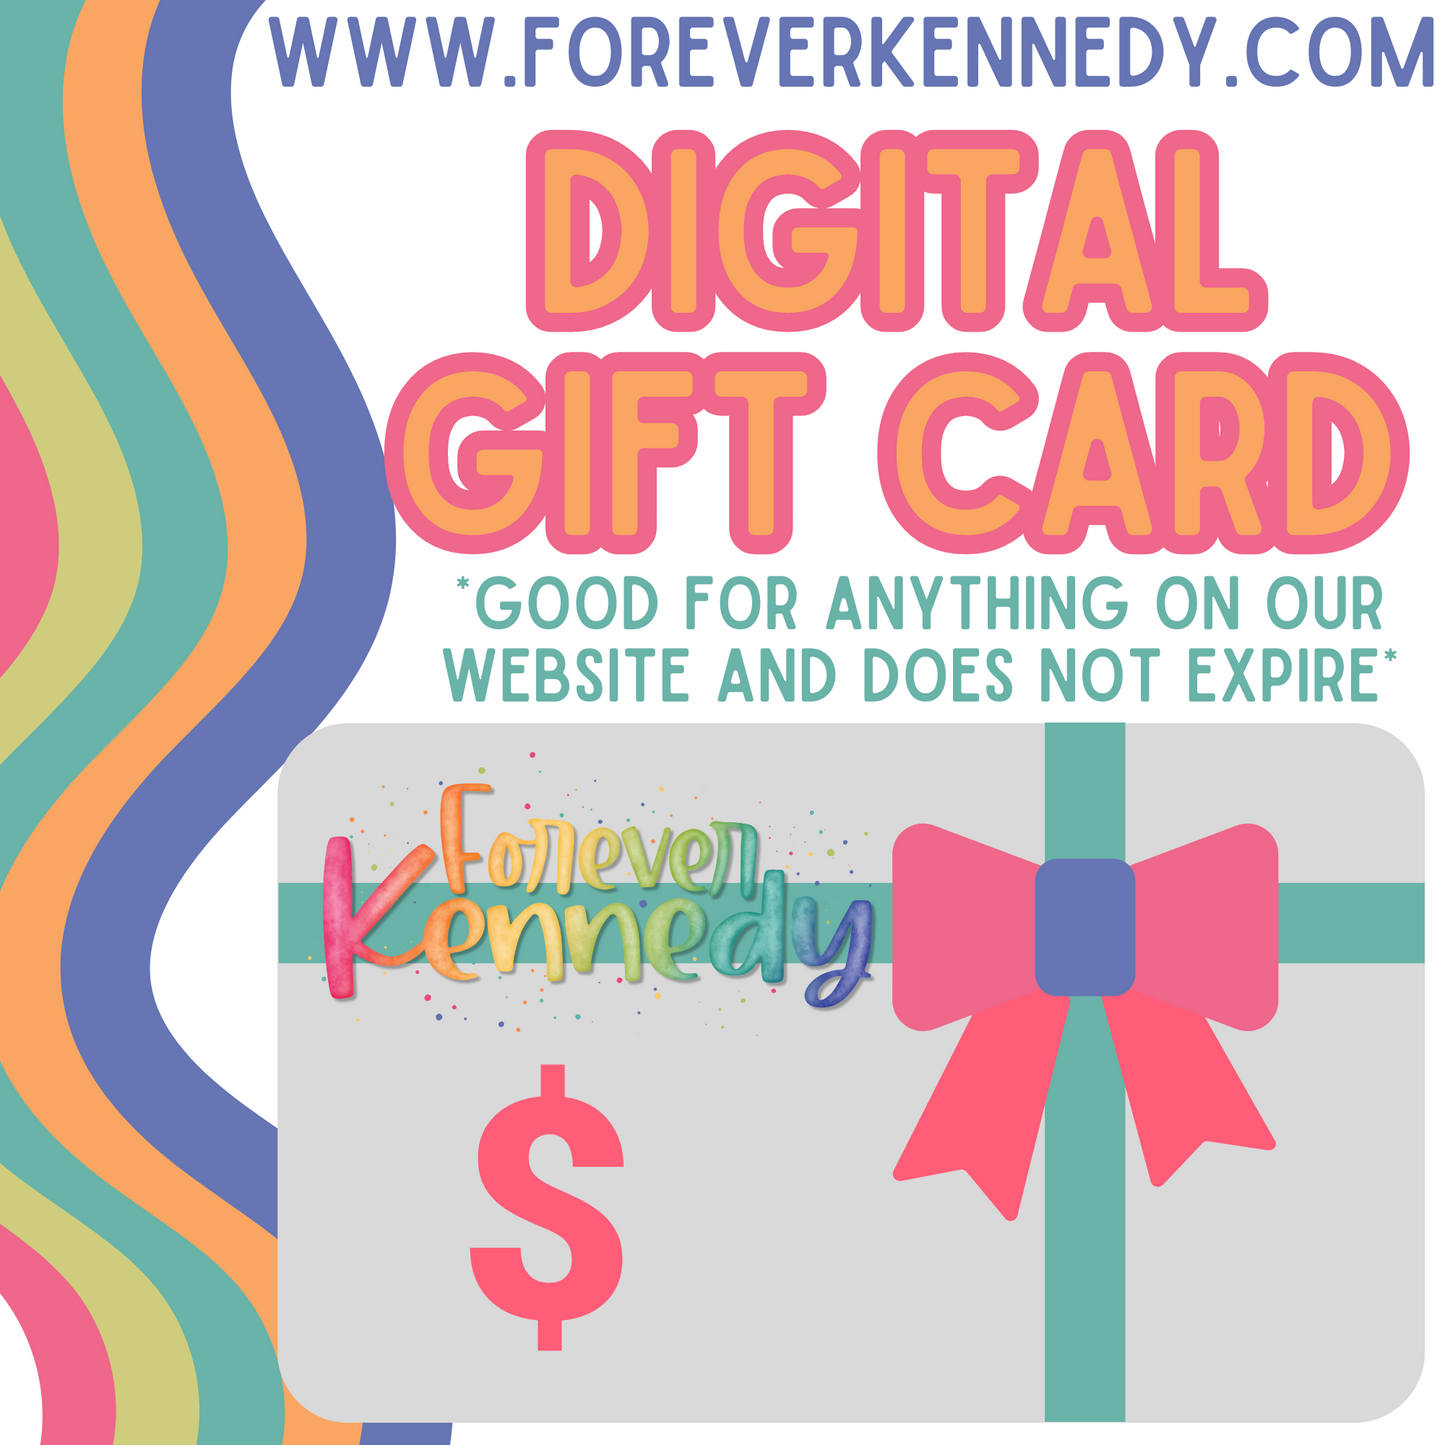 Forever Kennedy Gift Card